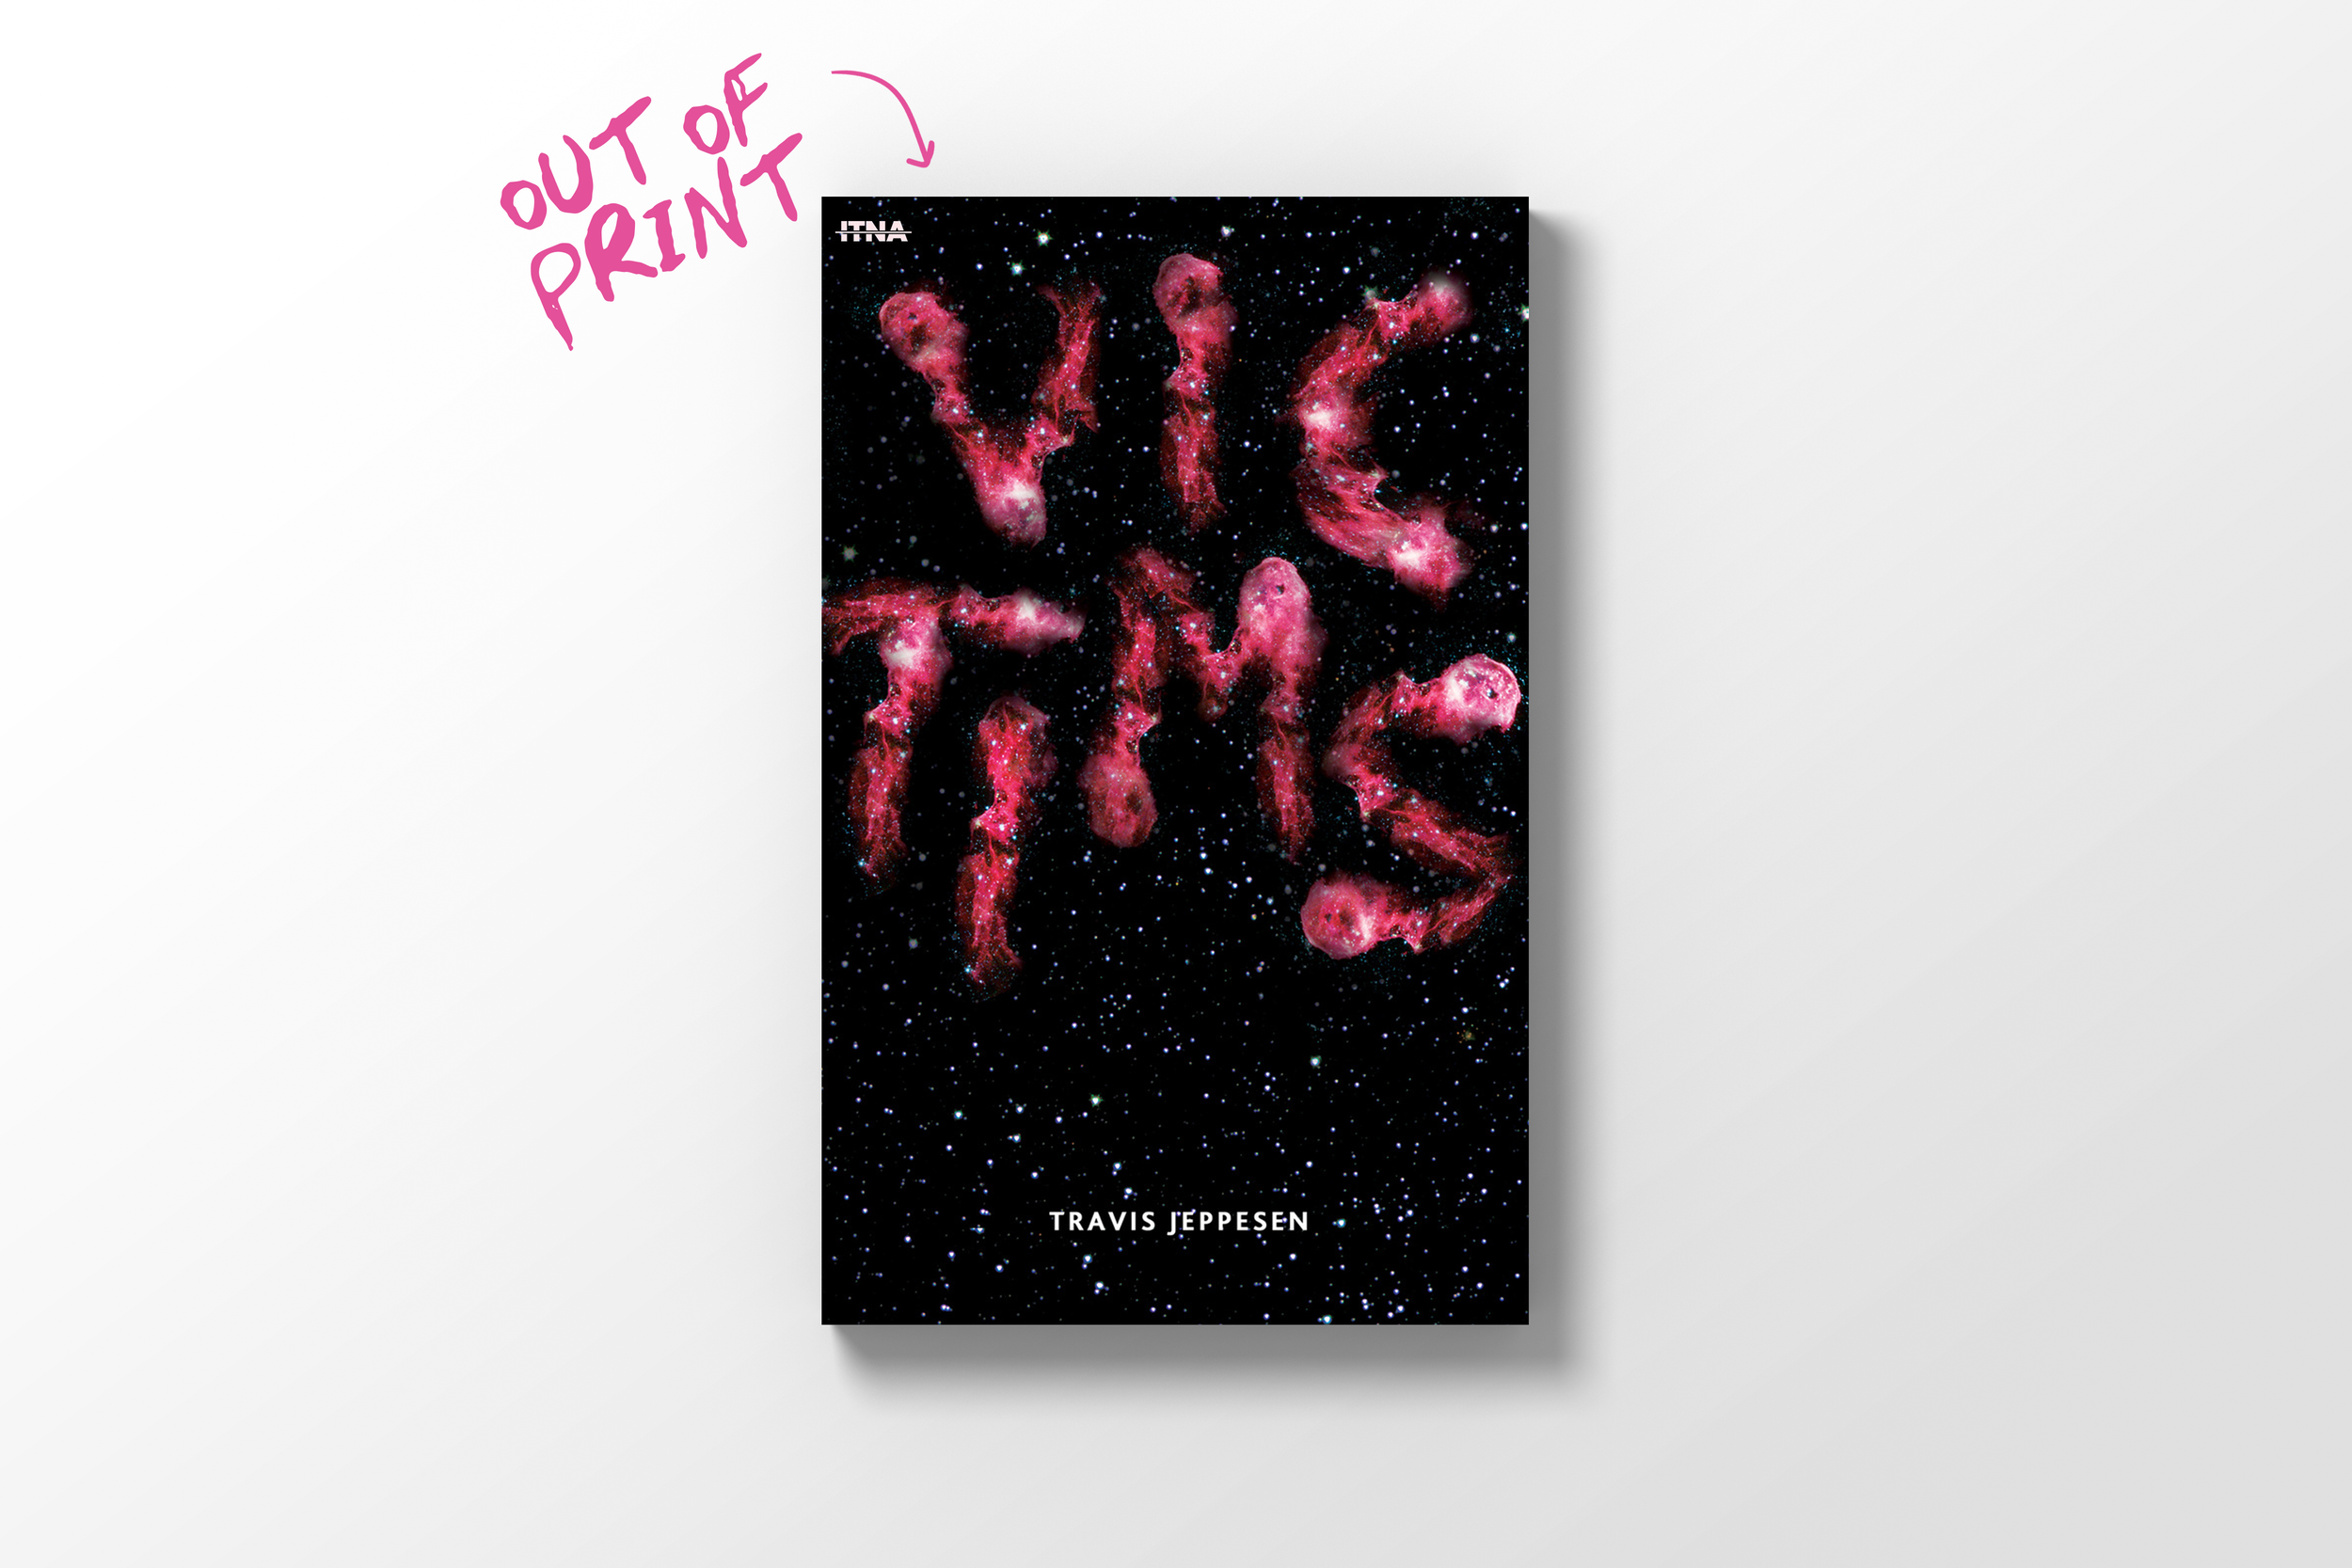 VICTIMS | Travis Jeppesen